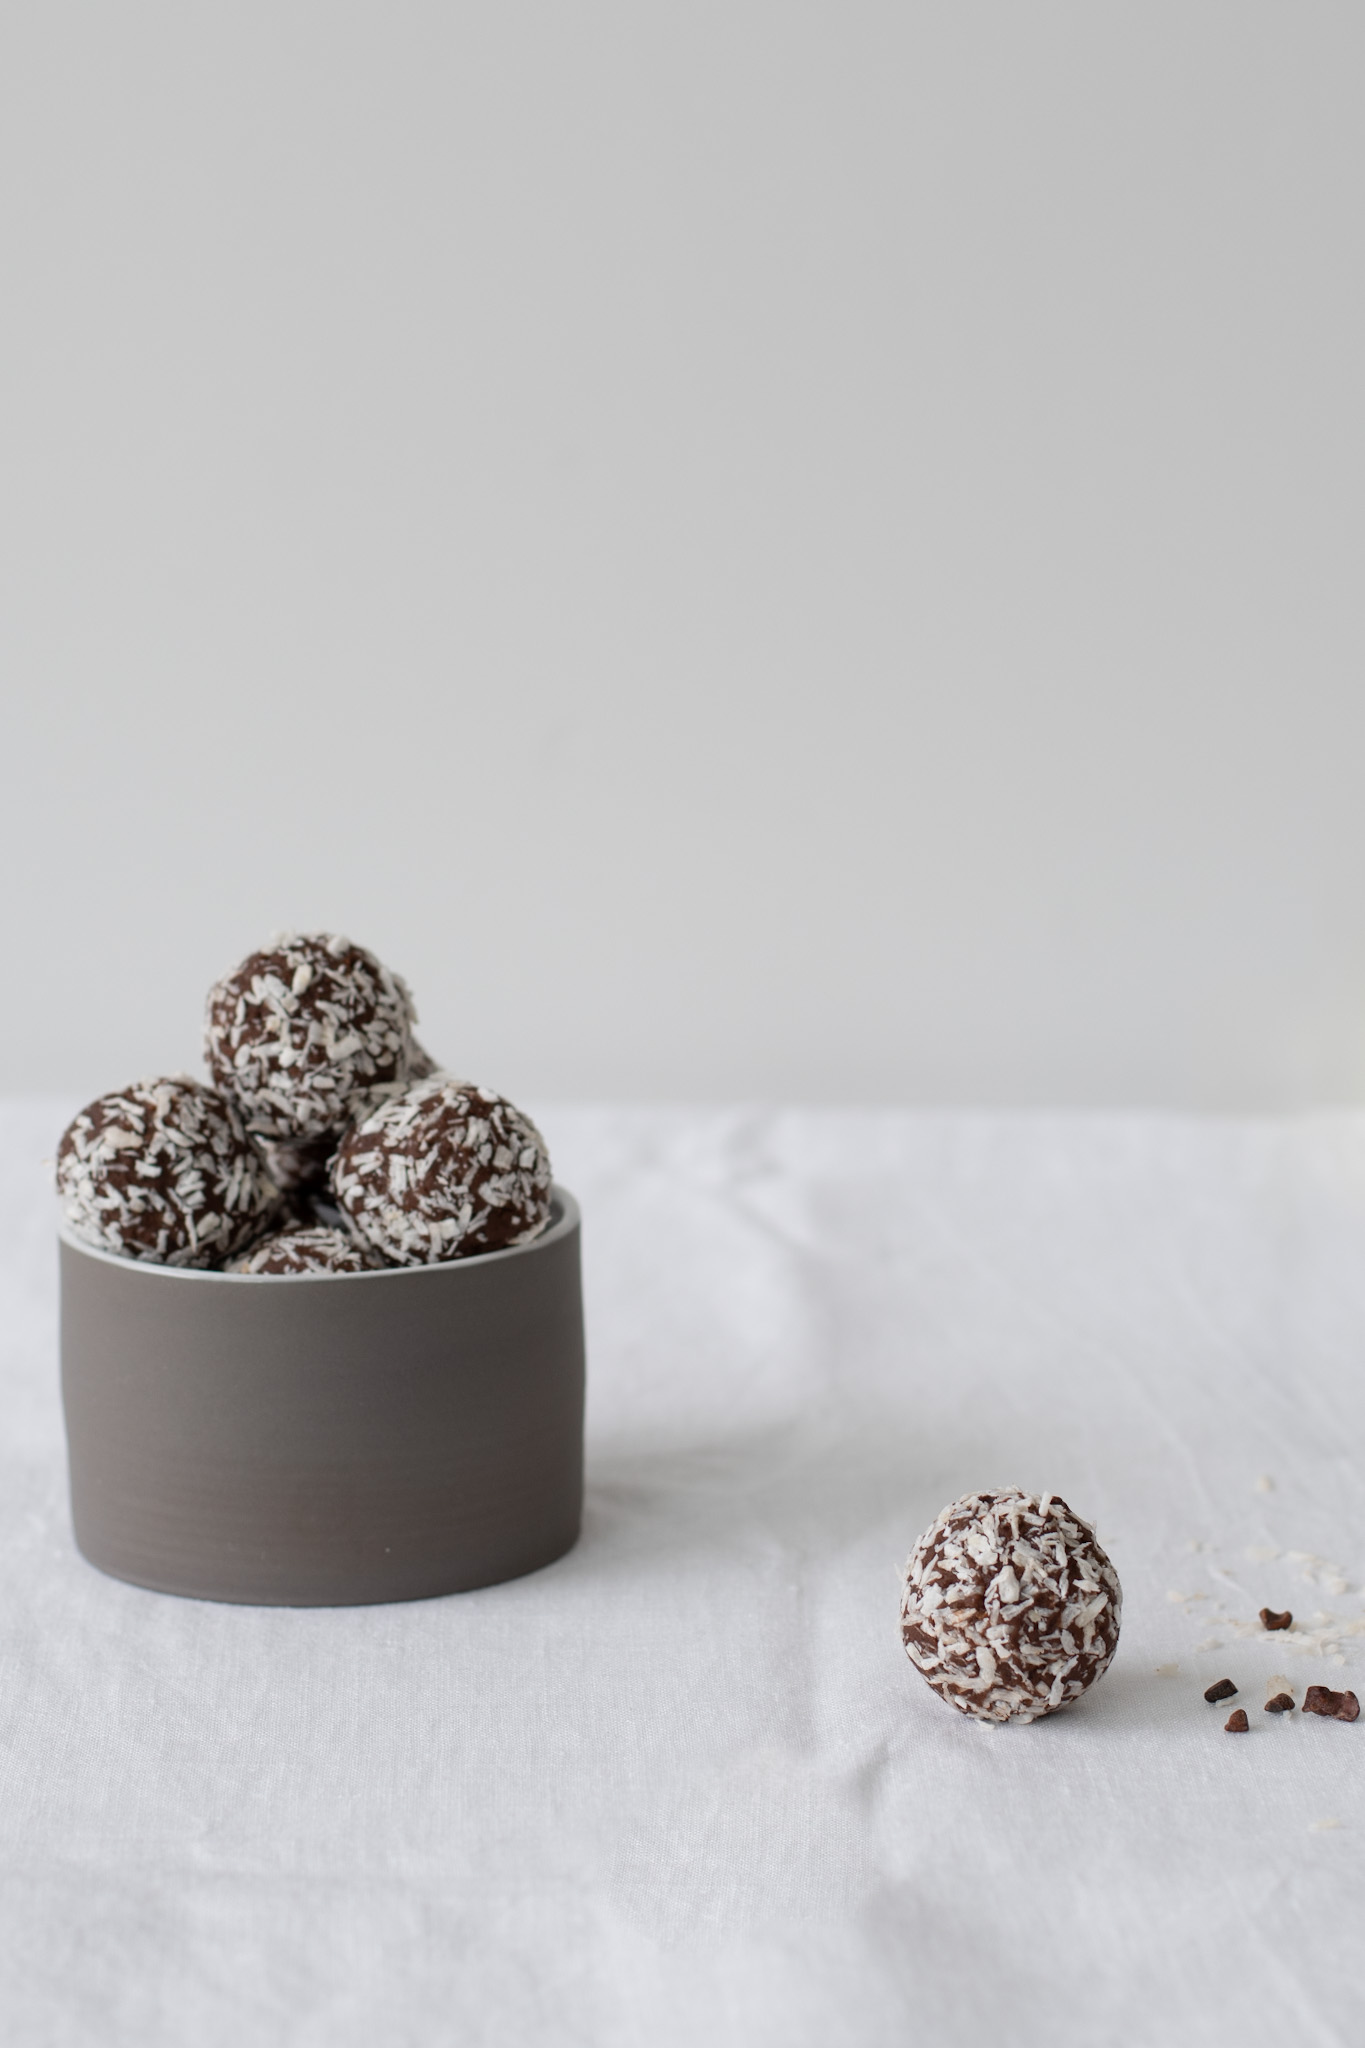 Healthy Swedish Chocolate Balls (Chokladbollar)